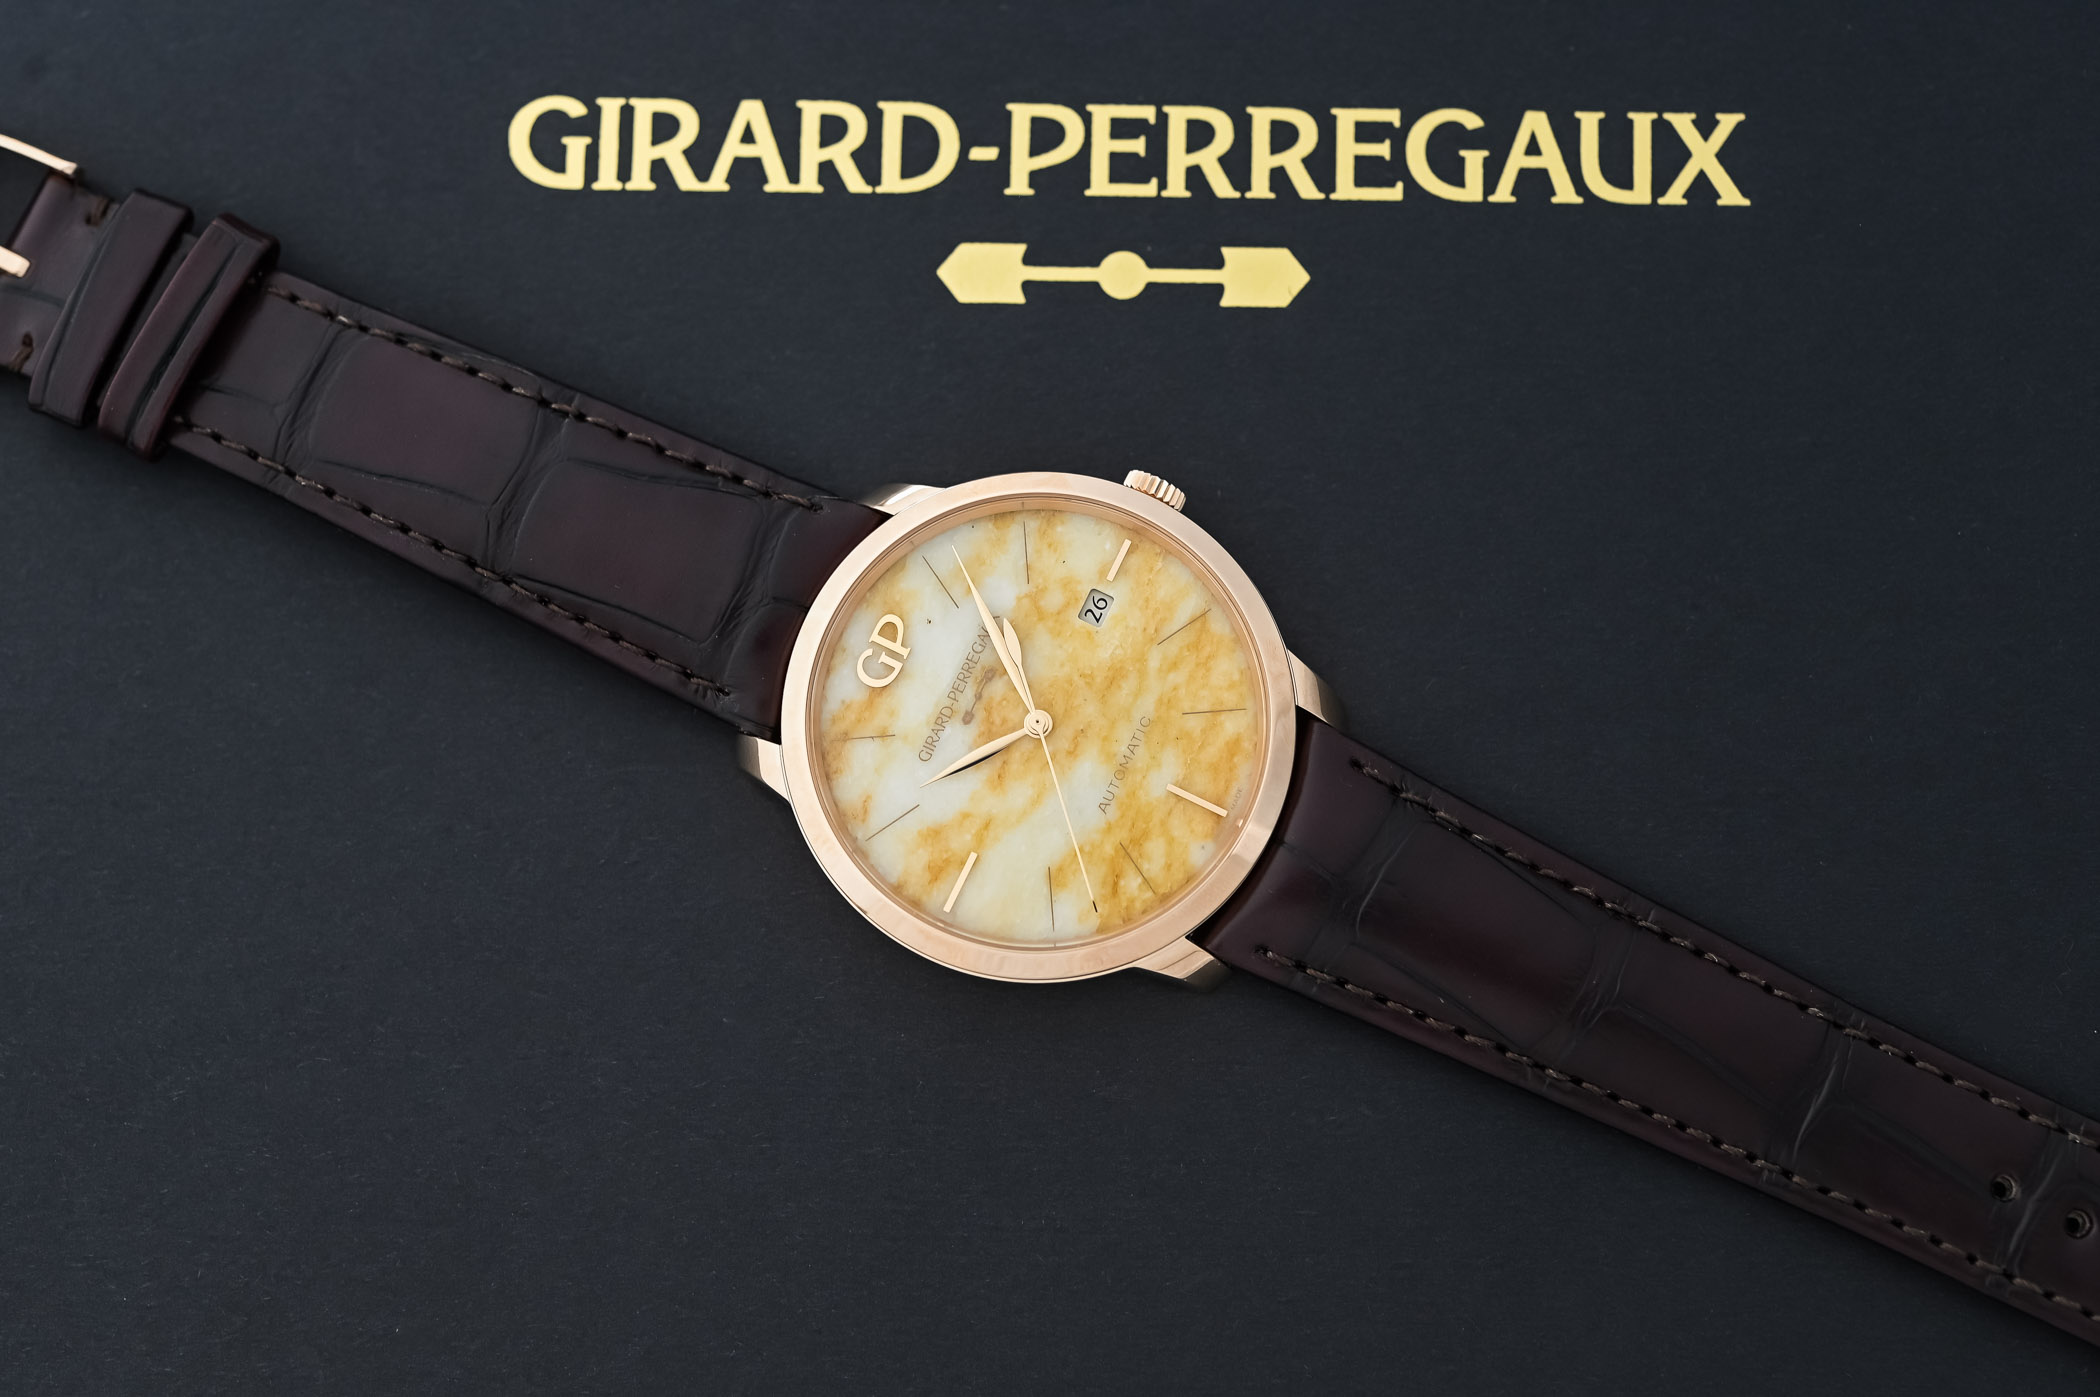 Girard-Perregaux 1966 Chateau Latour Edition hands-on - 1